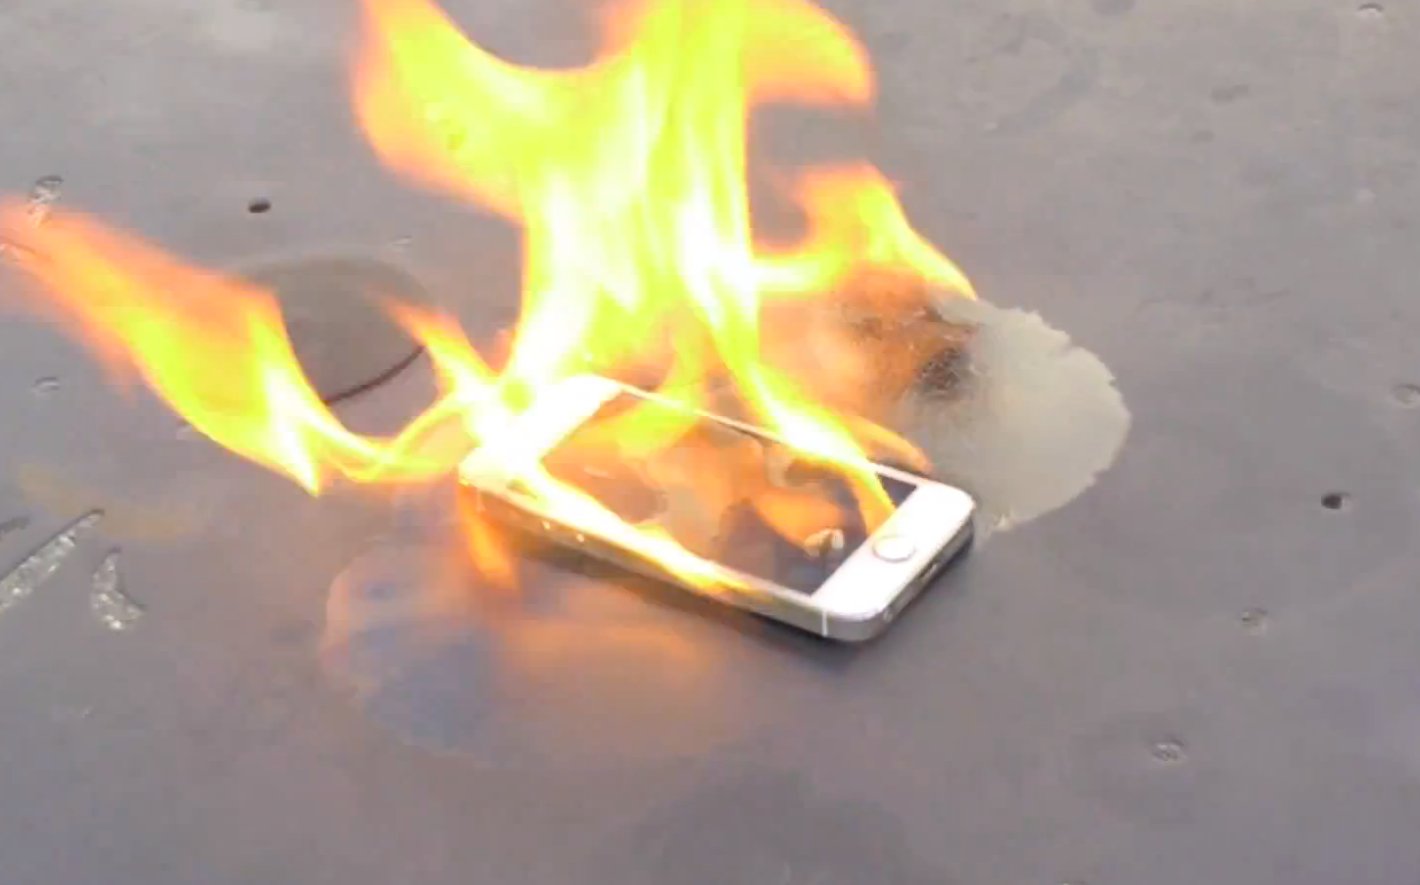 iPad Air Explosion im Vodafone Shop, brennendes iPhone 5s gold im Video! 2